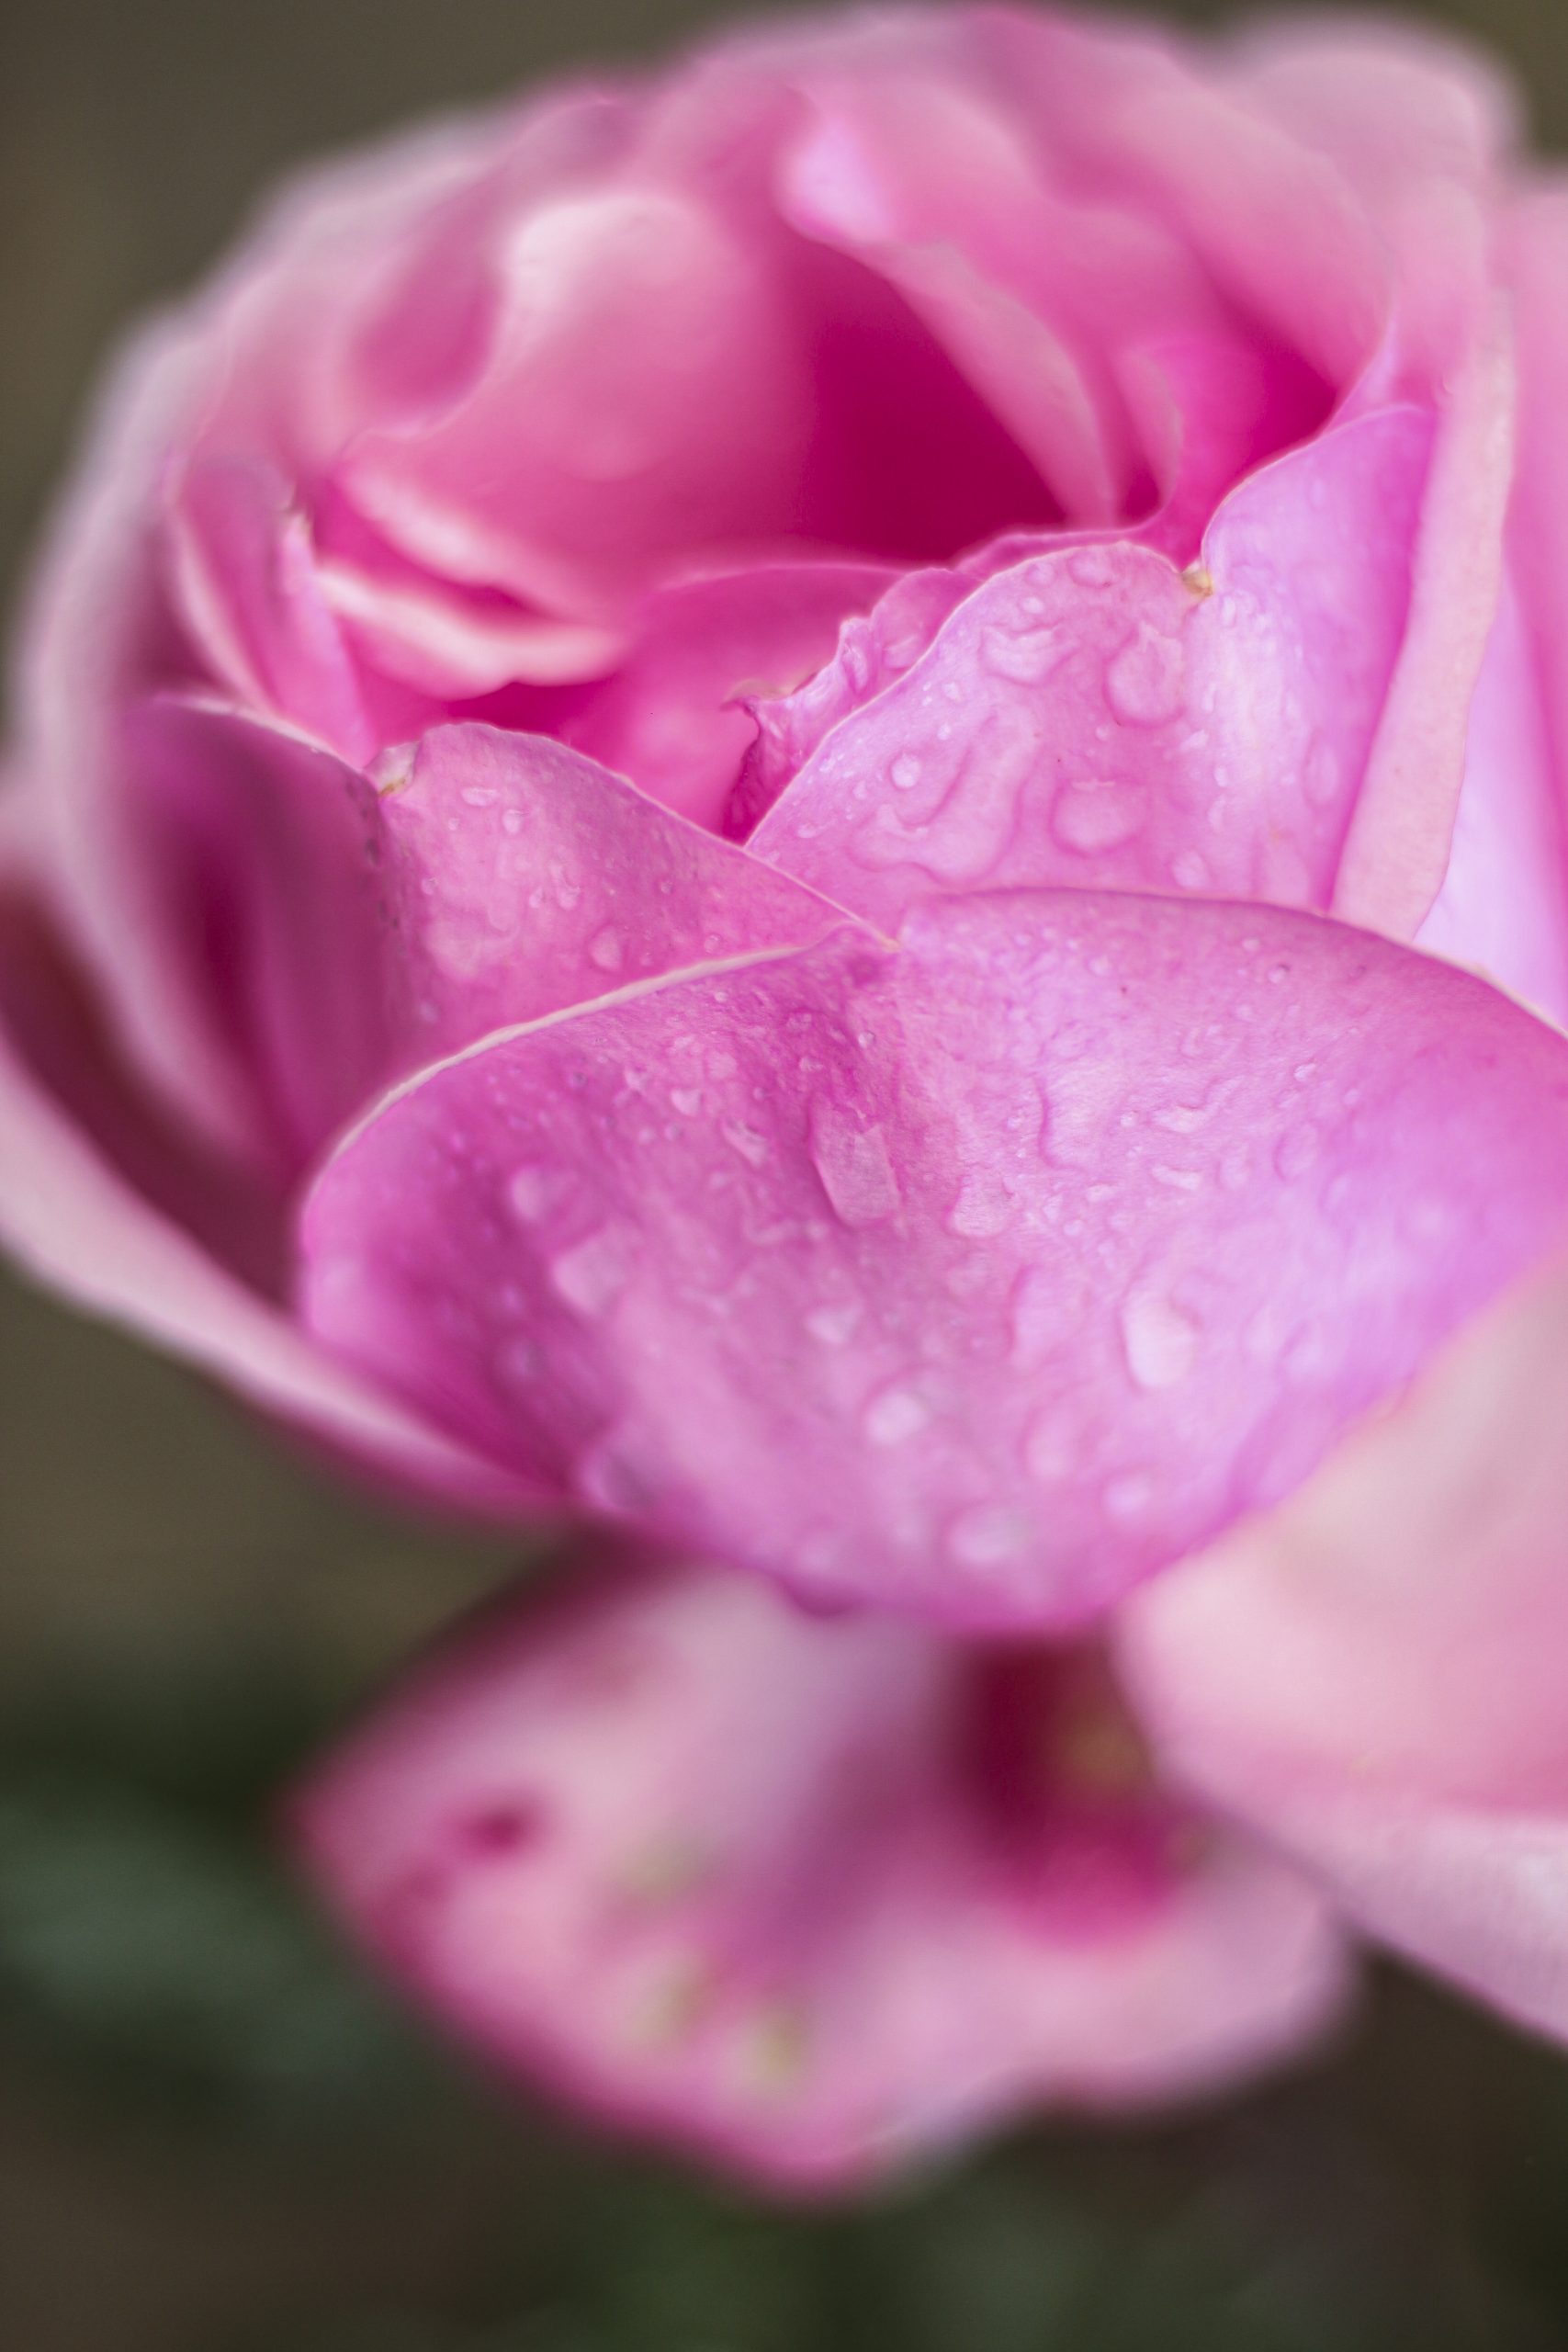 Macro shot of droplets on pink rose